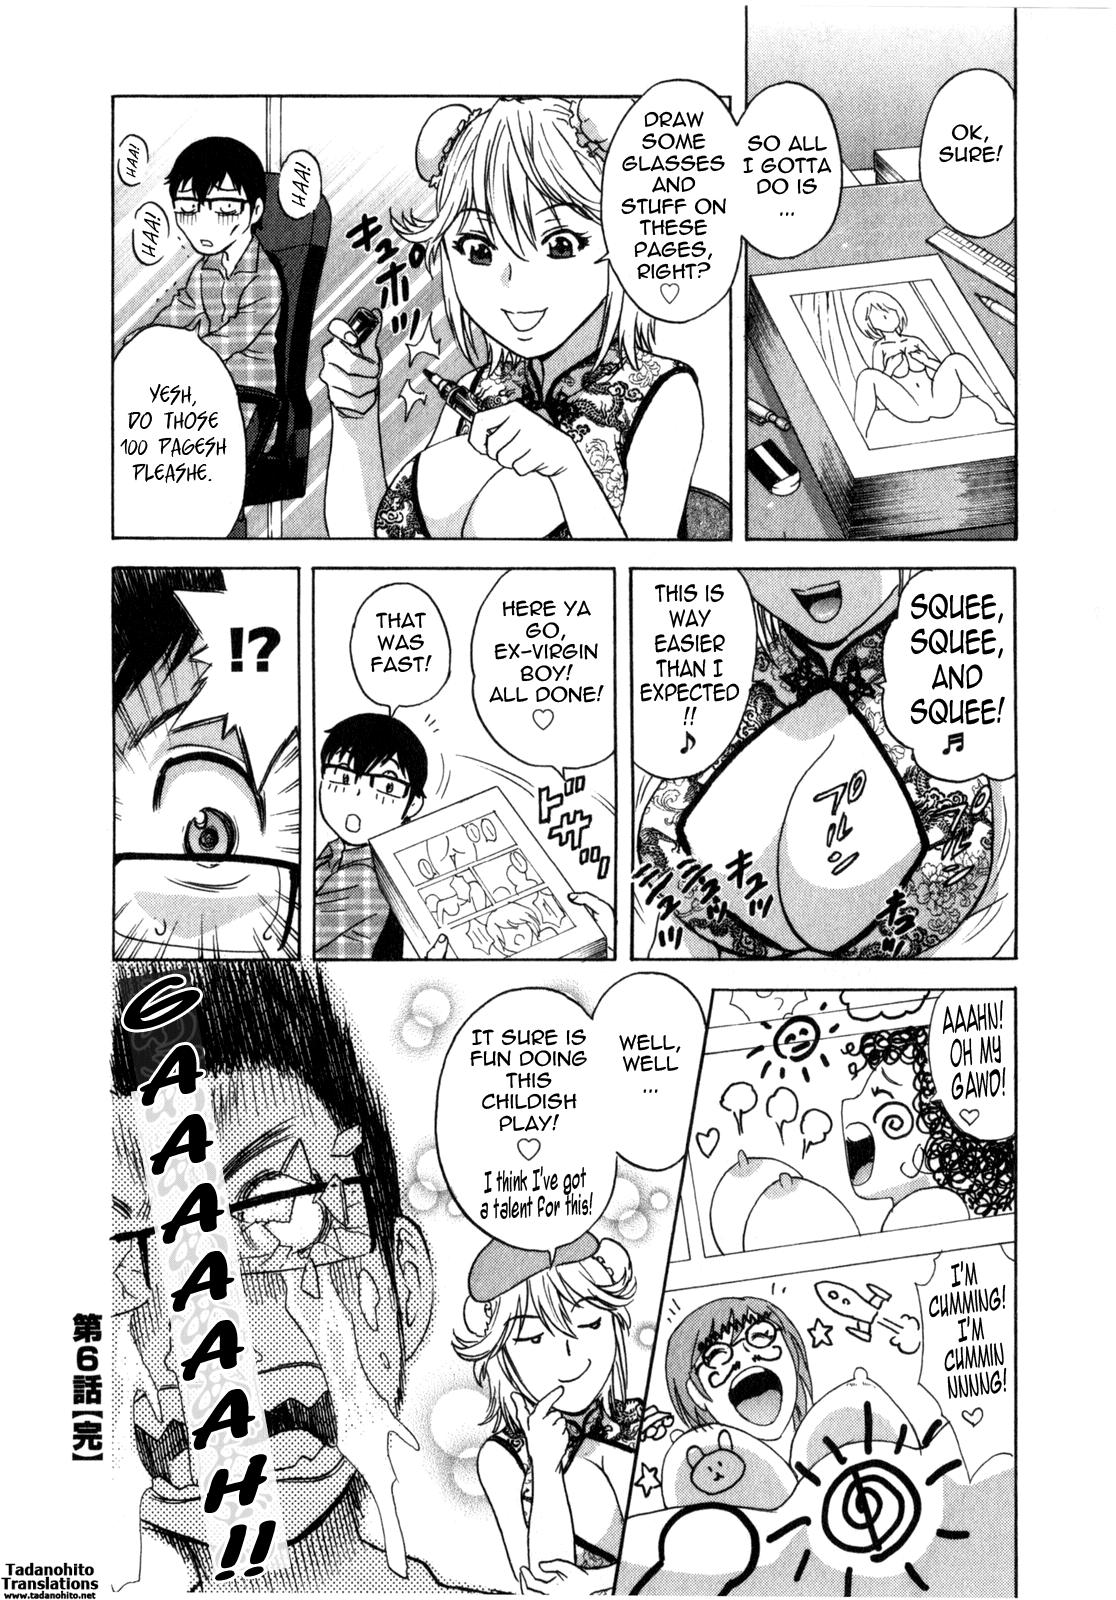 [Hidemaru] Life with Married Women Just Like a Manga 3 - Ch. 1-6 [English] {Tadanohito} 124